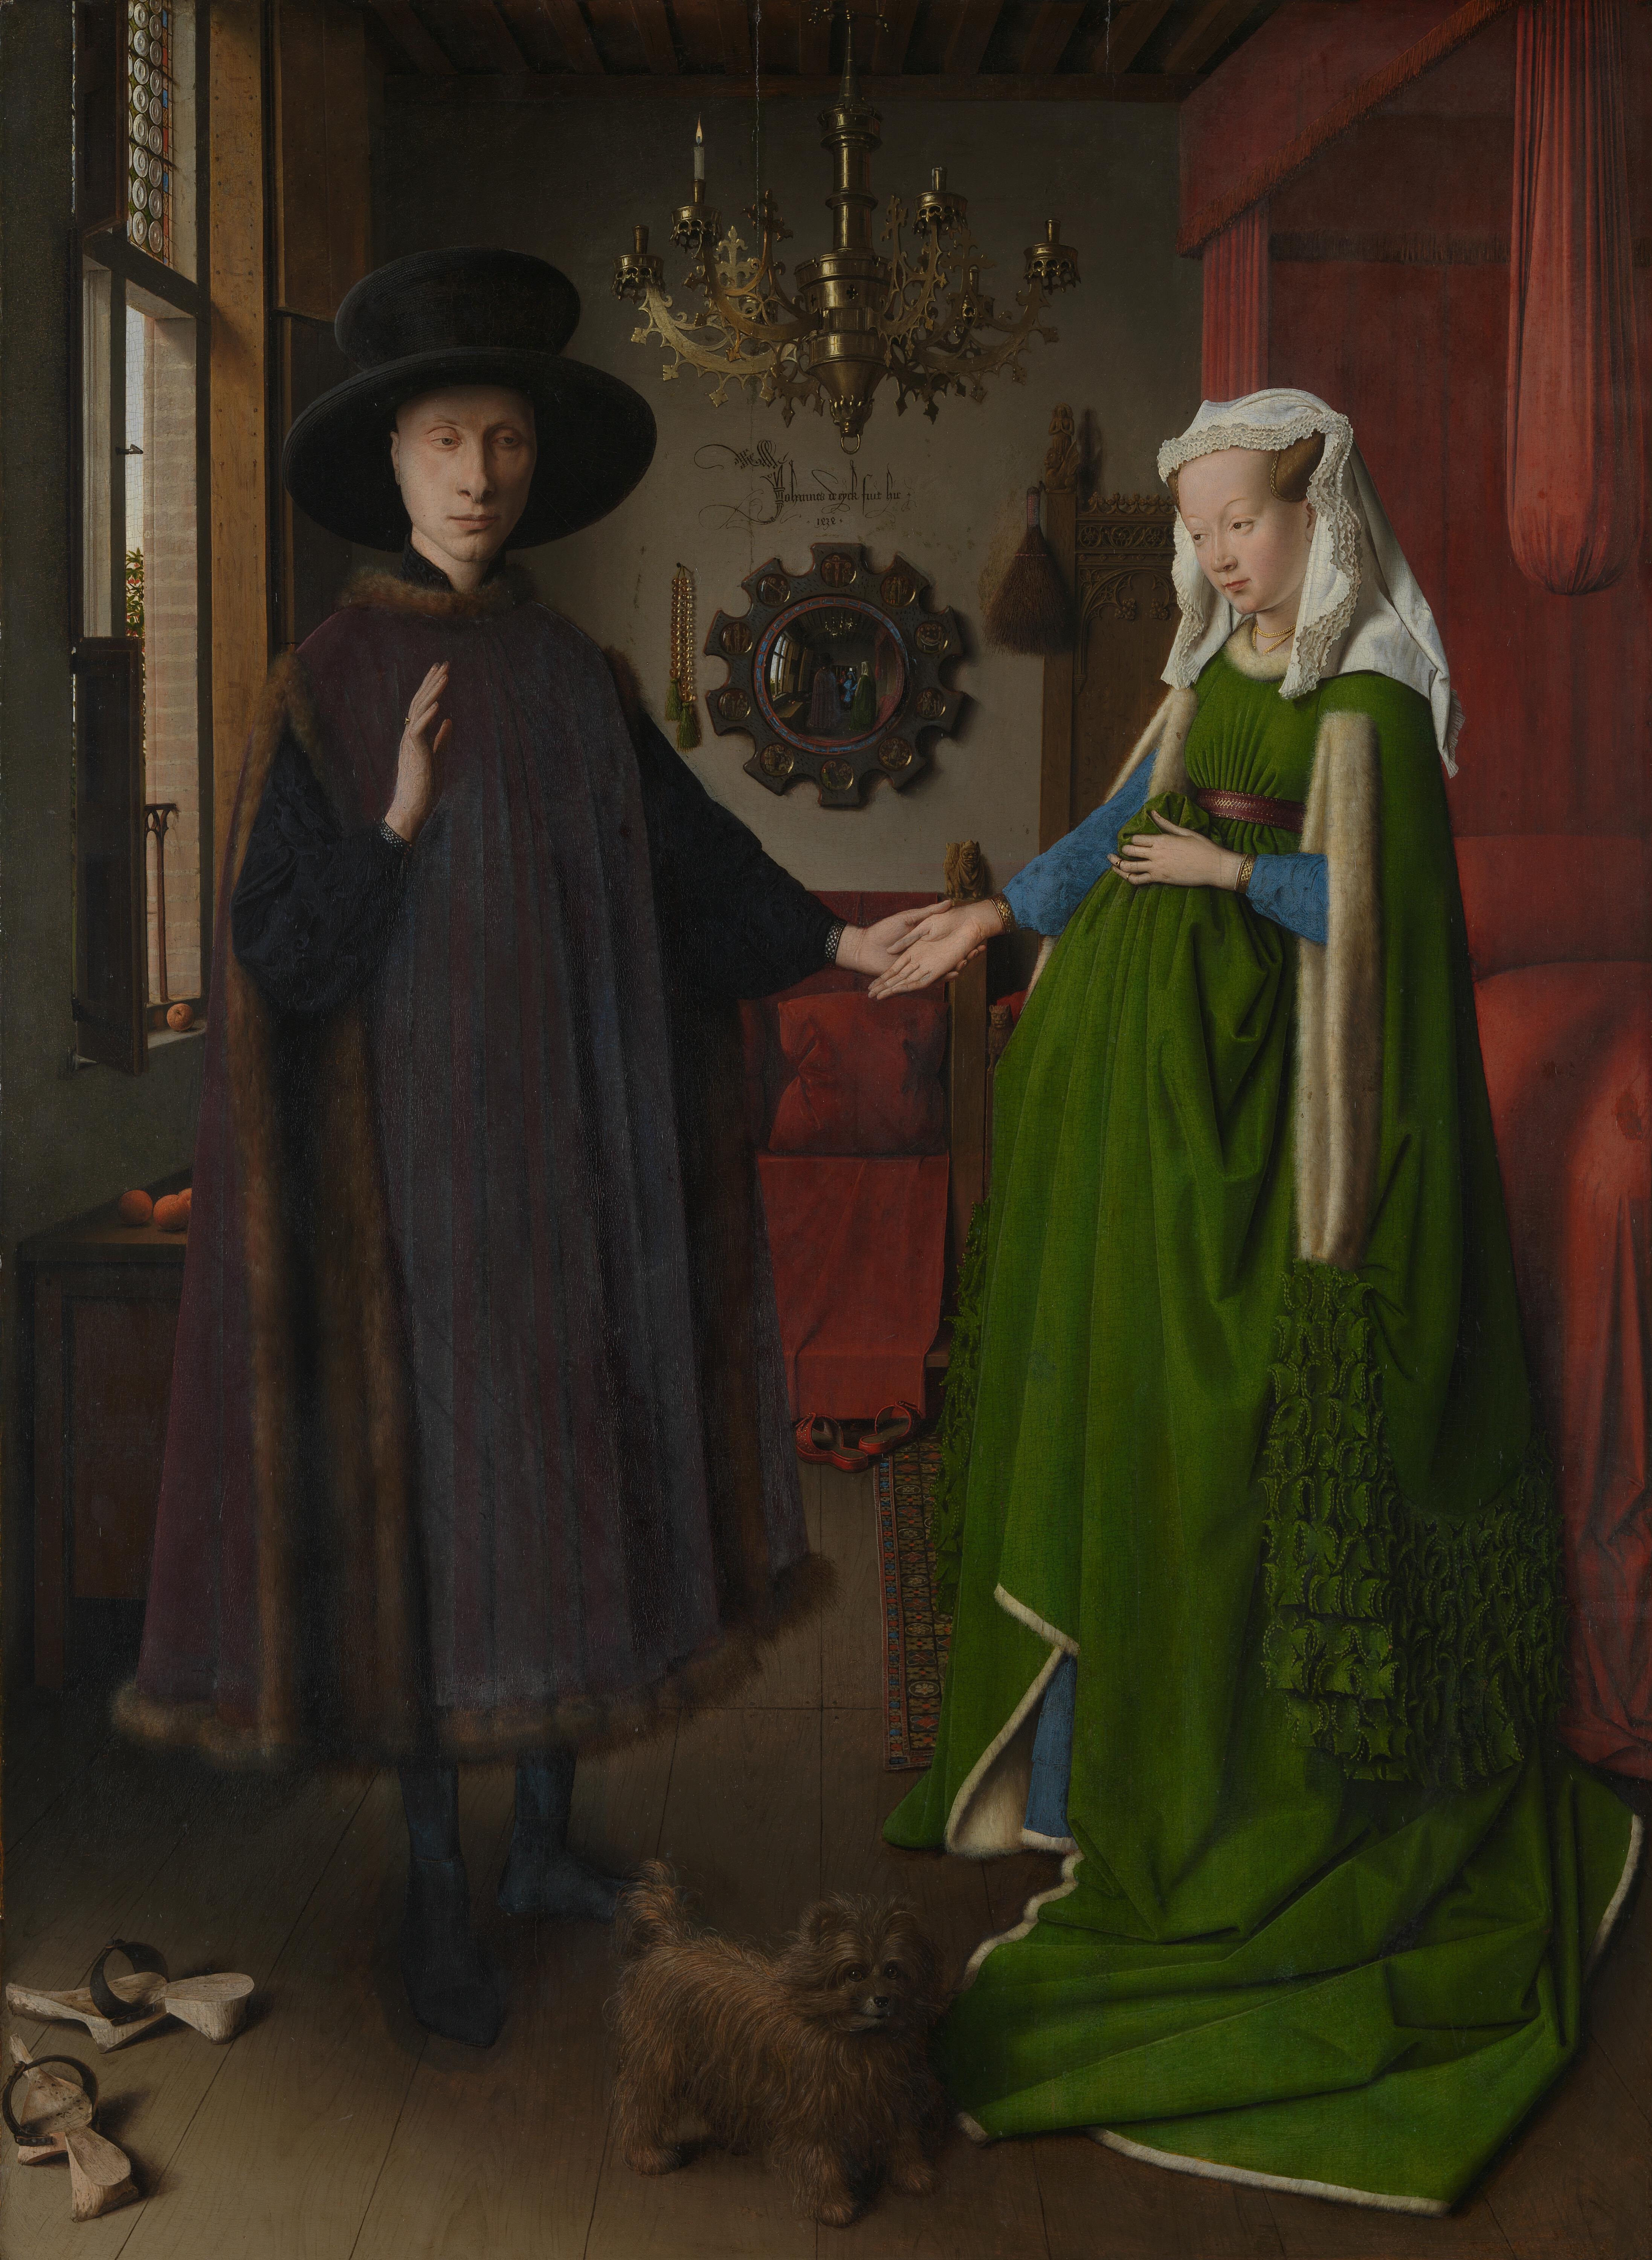 Arnolfini Portrait, 1434, National Gallery, London.